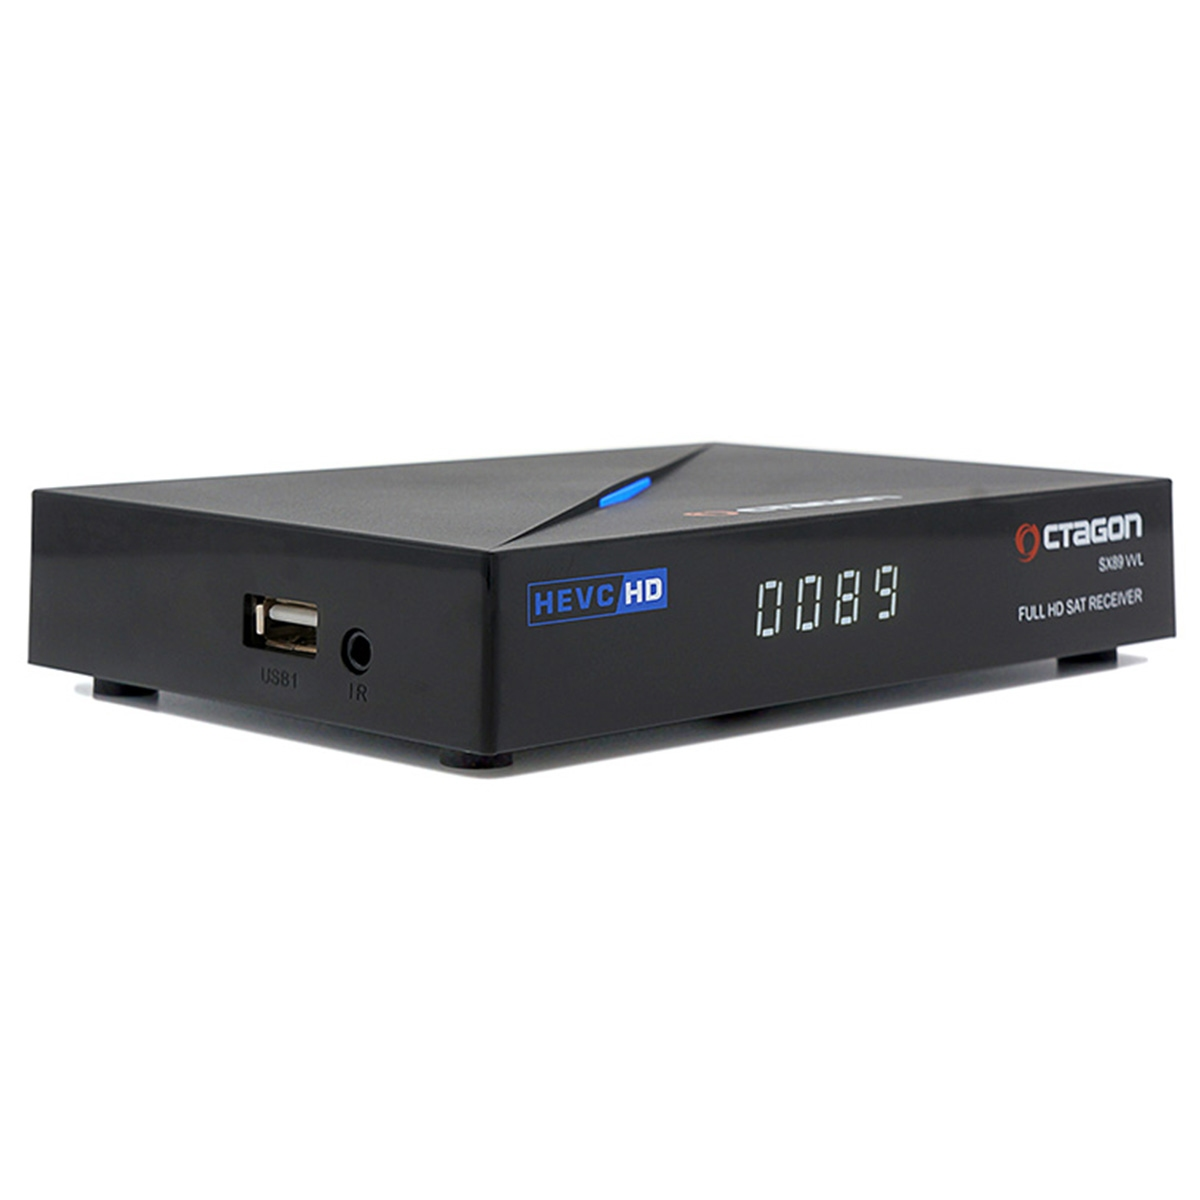 HDMI OCTAGON WL DVB-S2 Sat Receiver HD Receiver IP SX89 IP Tuner Sat Linux (Schwarz) LAN Full WiFi H.265